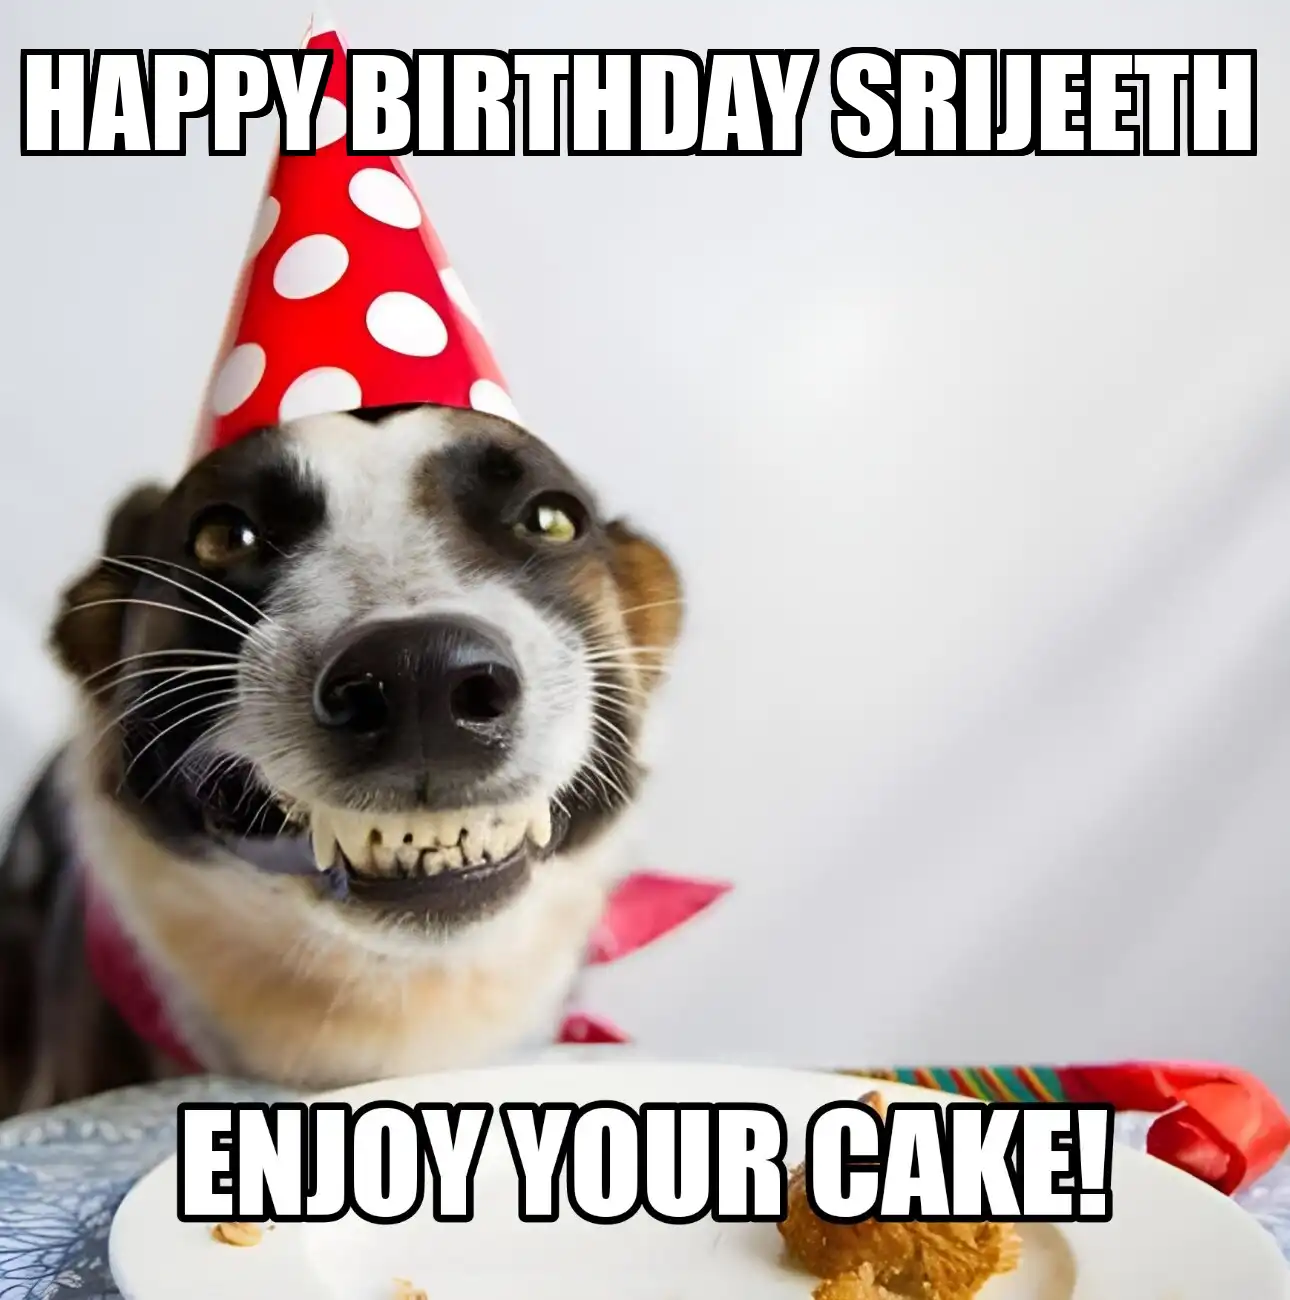 Happy Birthday Srijeeth Enjoy Your Cake Dog Meme